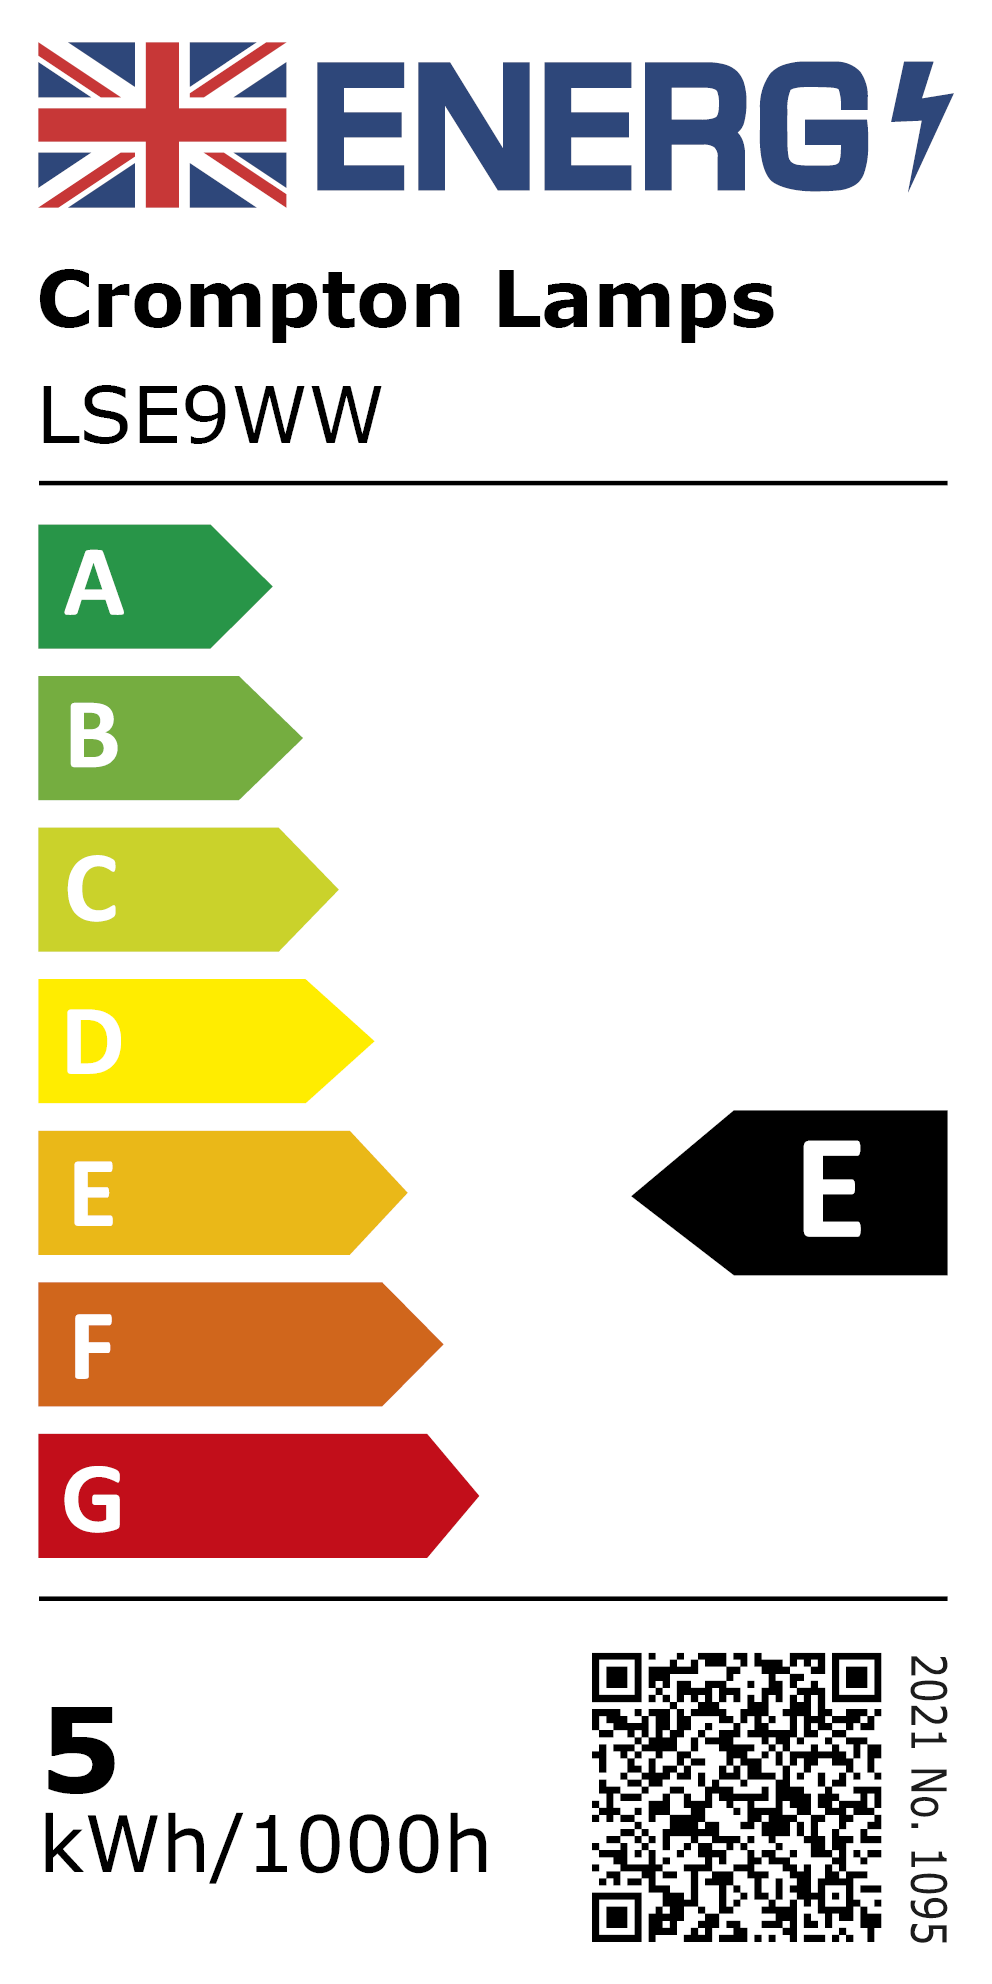 New 2021 Energy Rating Label: MPN LSE9WW